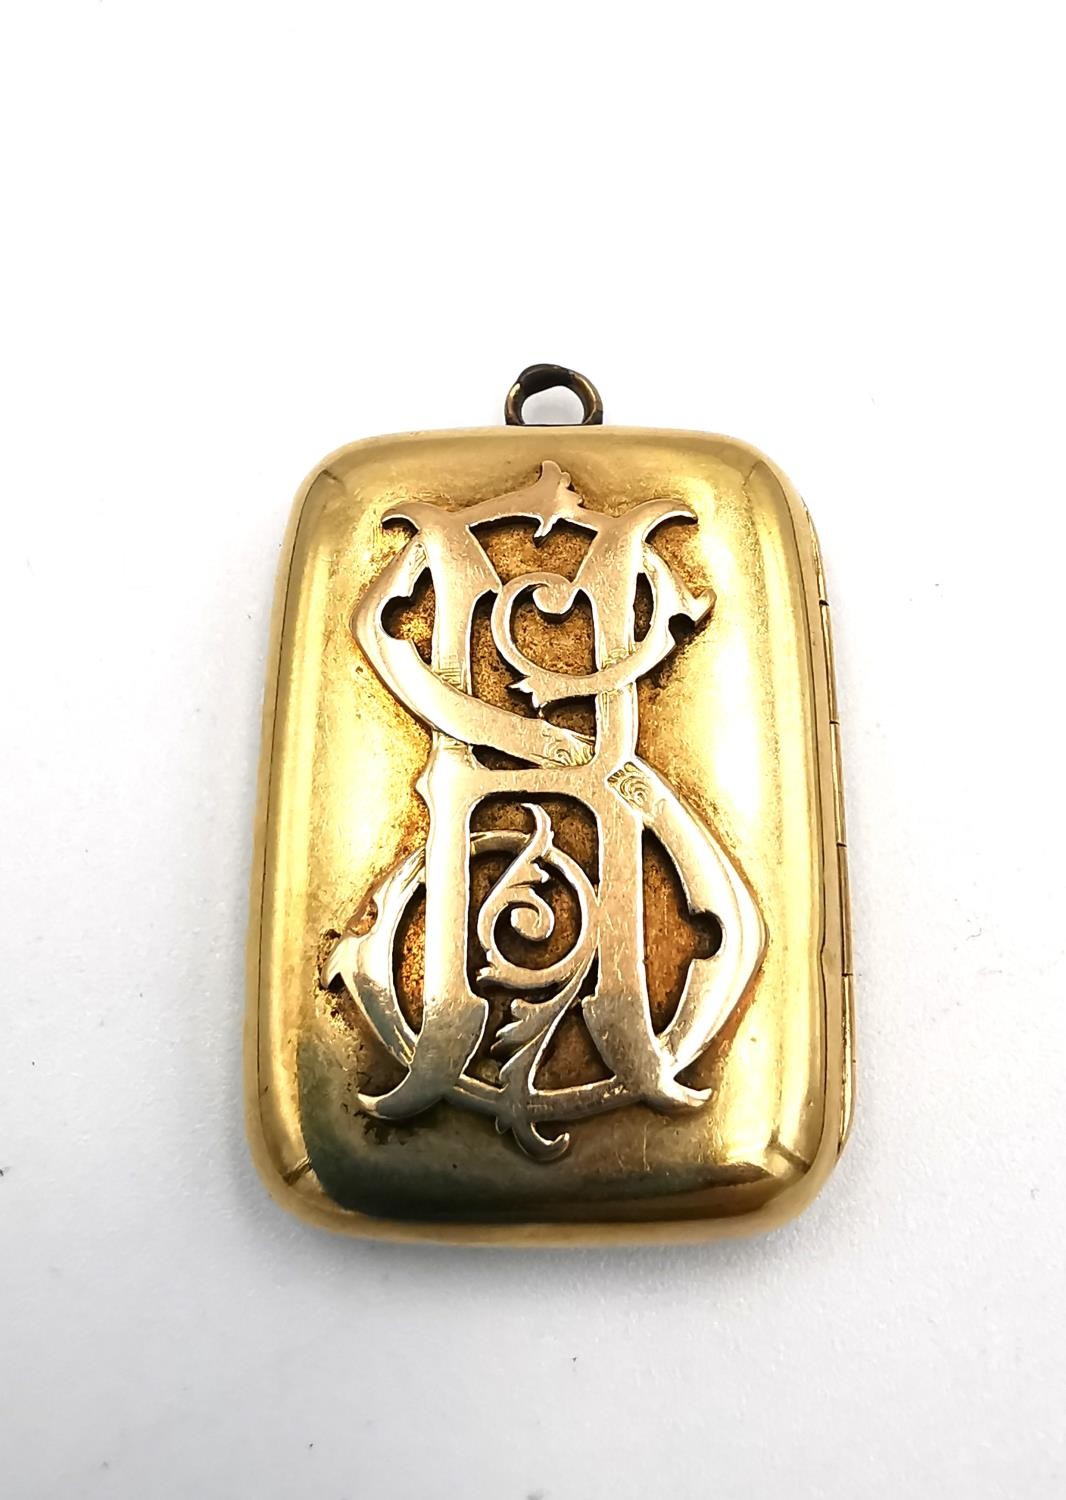 An early 20th century Austrian yellow metal (tests as 18 carat gold) rectangular locket with